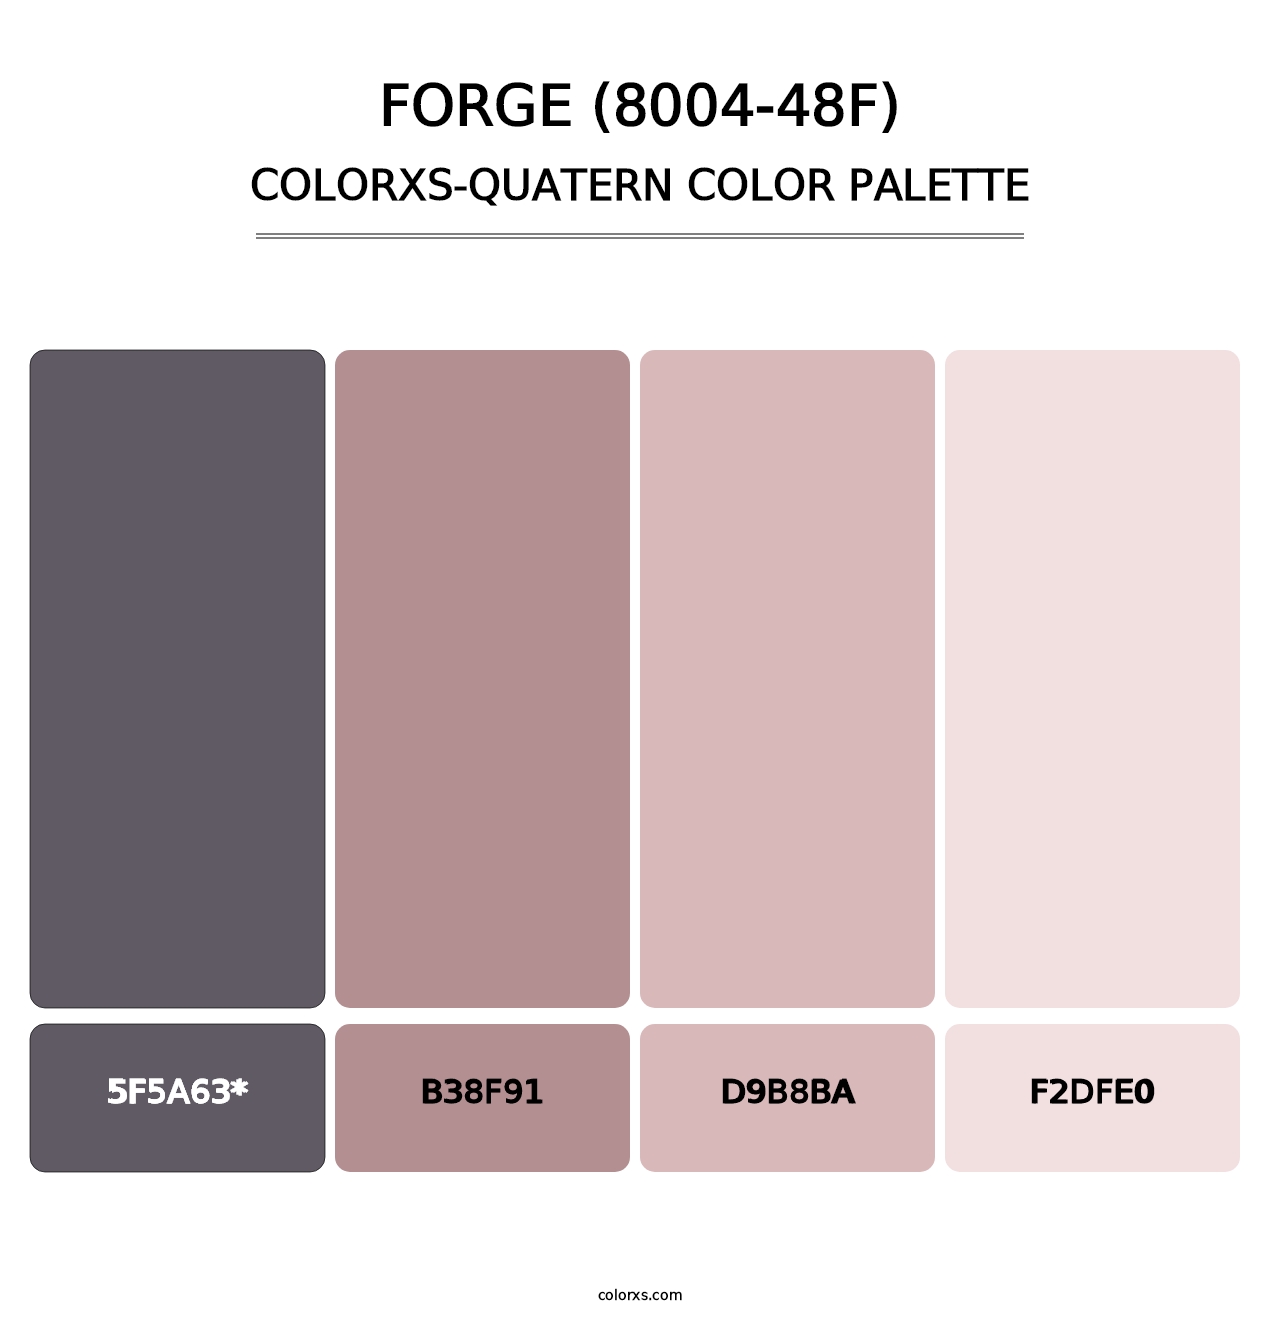 Forge (8004-48F) - Colorxs Quatern Palette